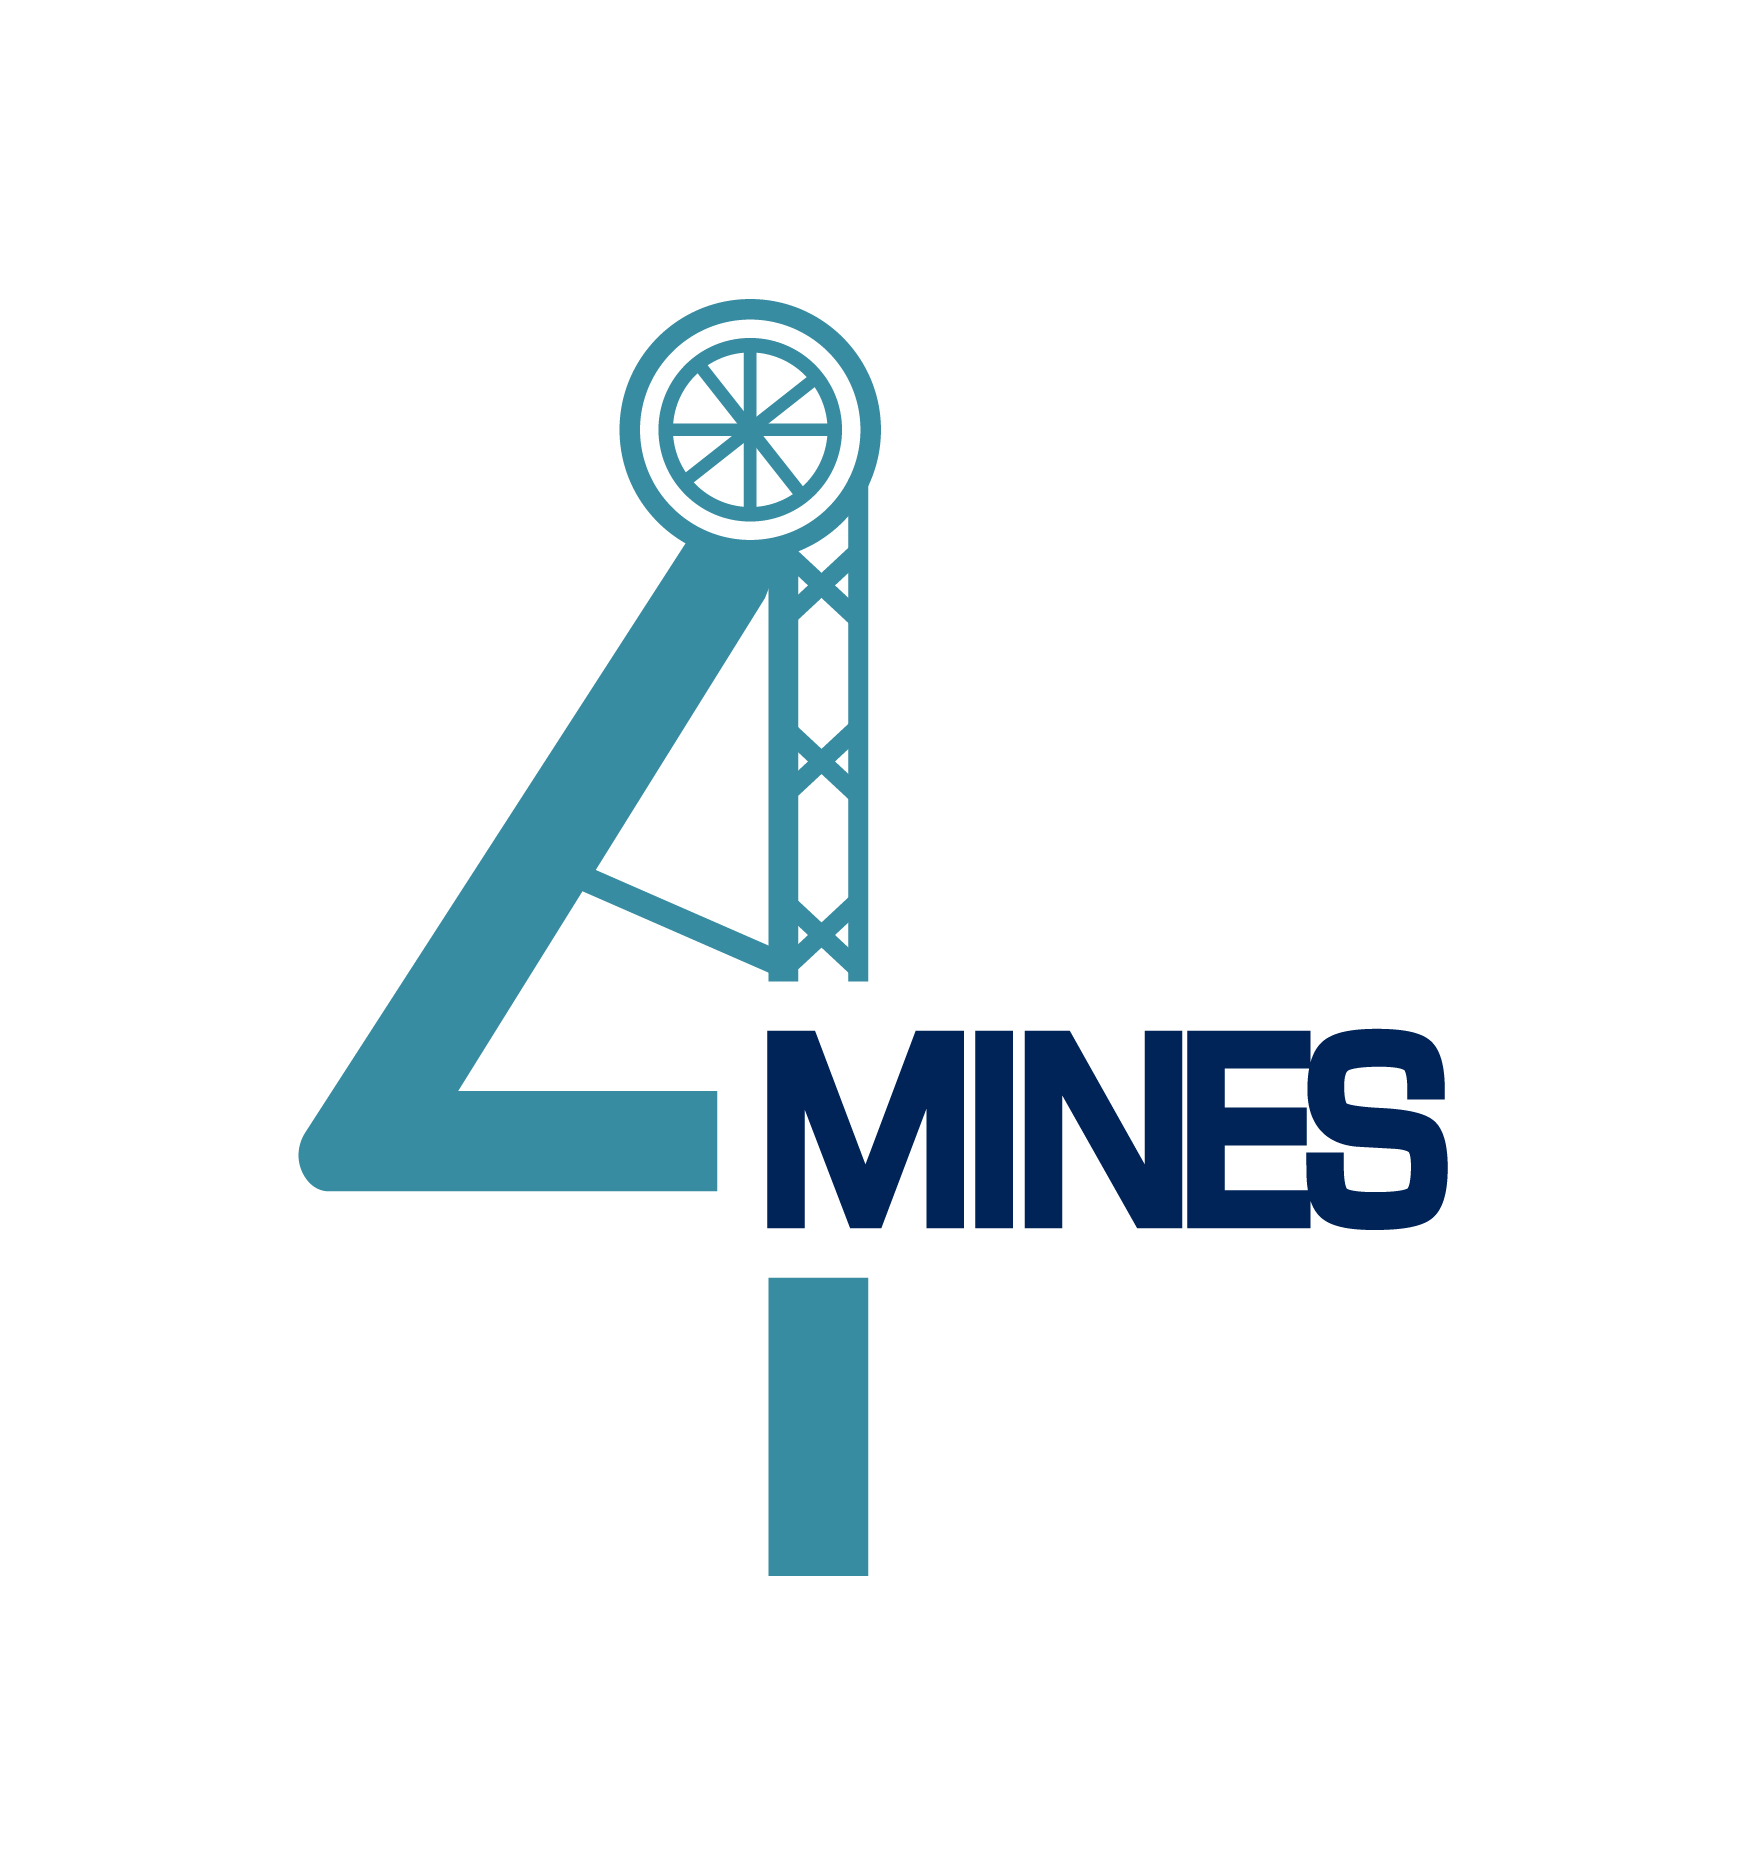 4mines